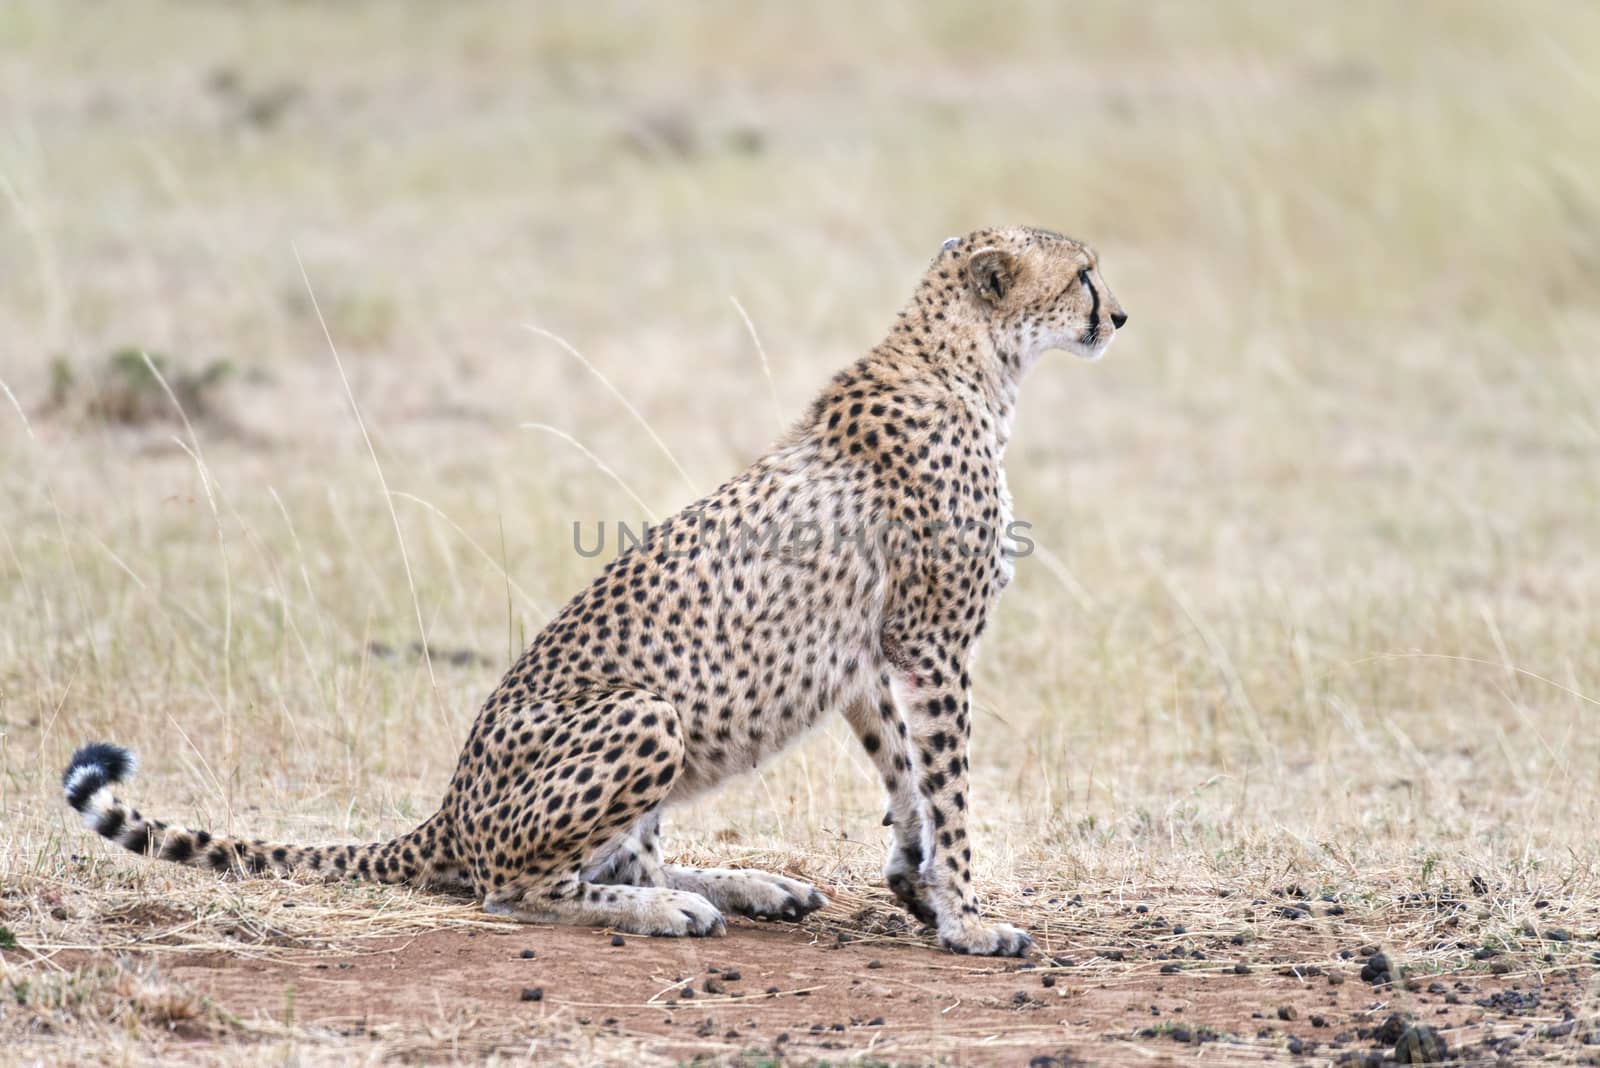 African cheetah by snafu